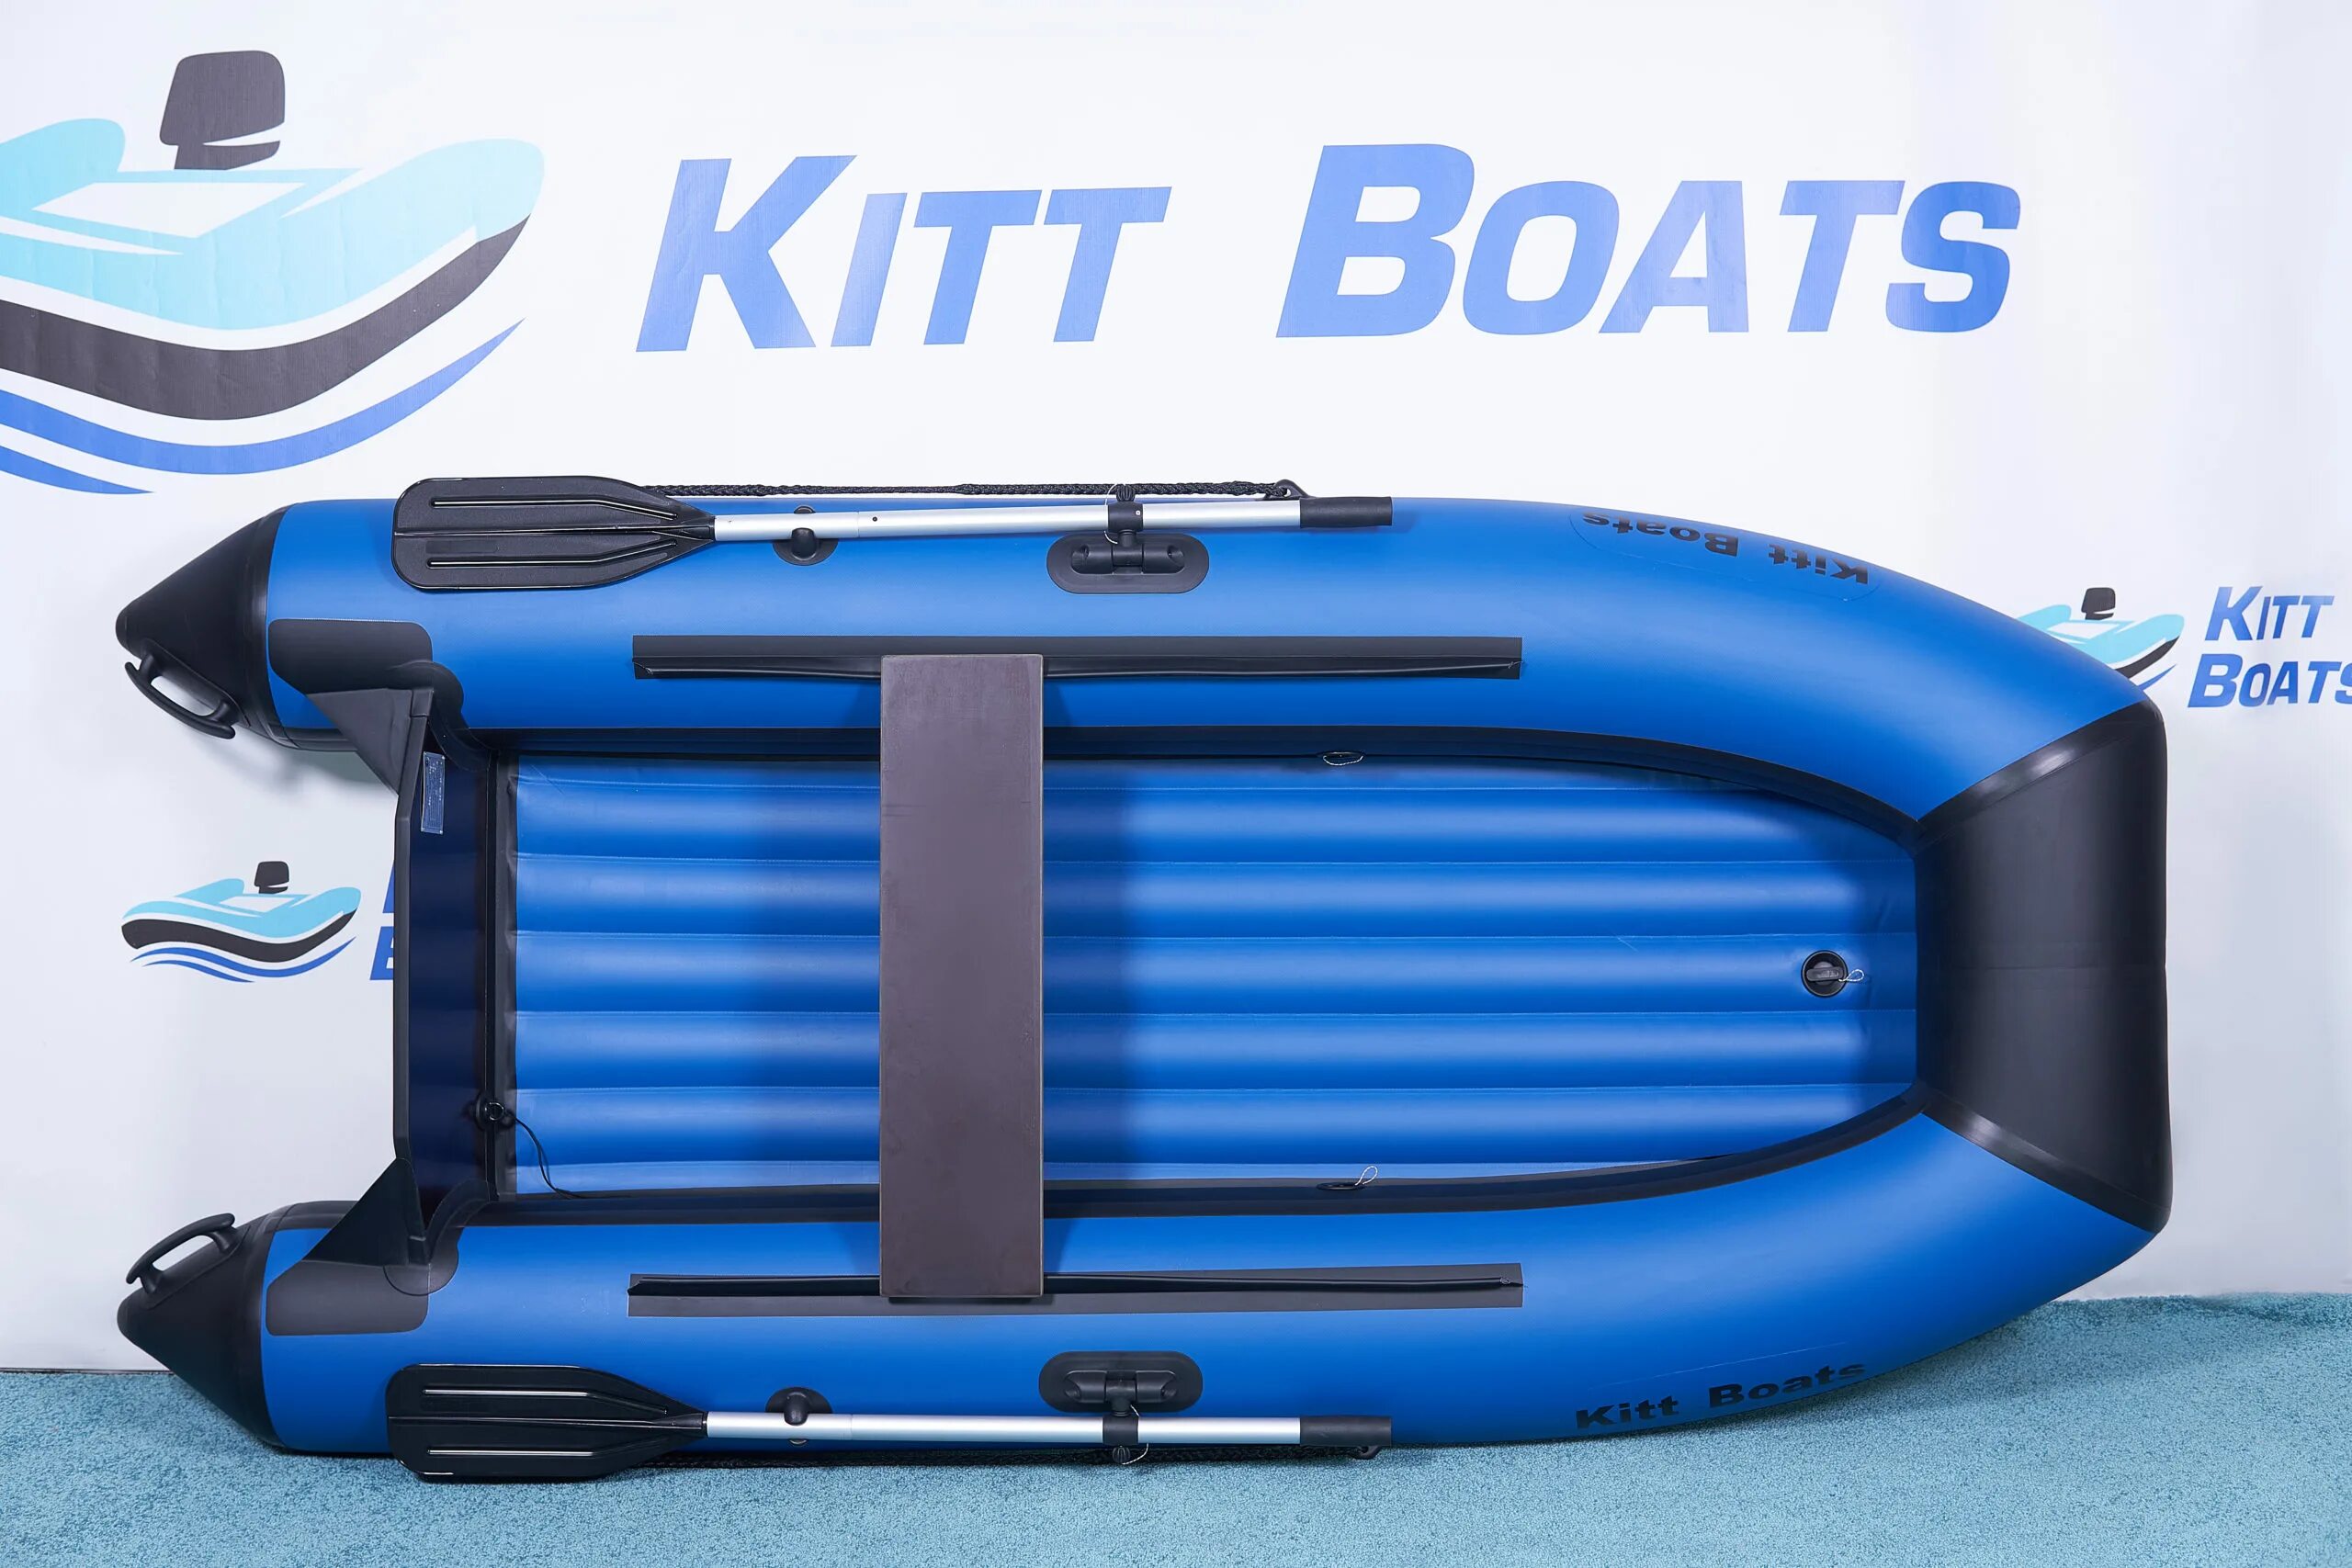 Kitt Boats 270 НДНД. Лодка ПВХ Kitt Boats 270 НДНД + интерцептор моторная. Kitt Boats 330 НДНД. Лодка НДНД 410 kittboats. Купить лодку 270